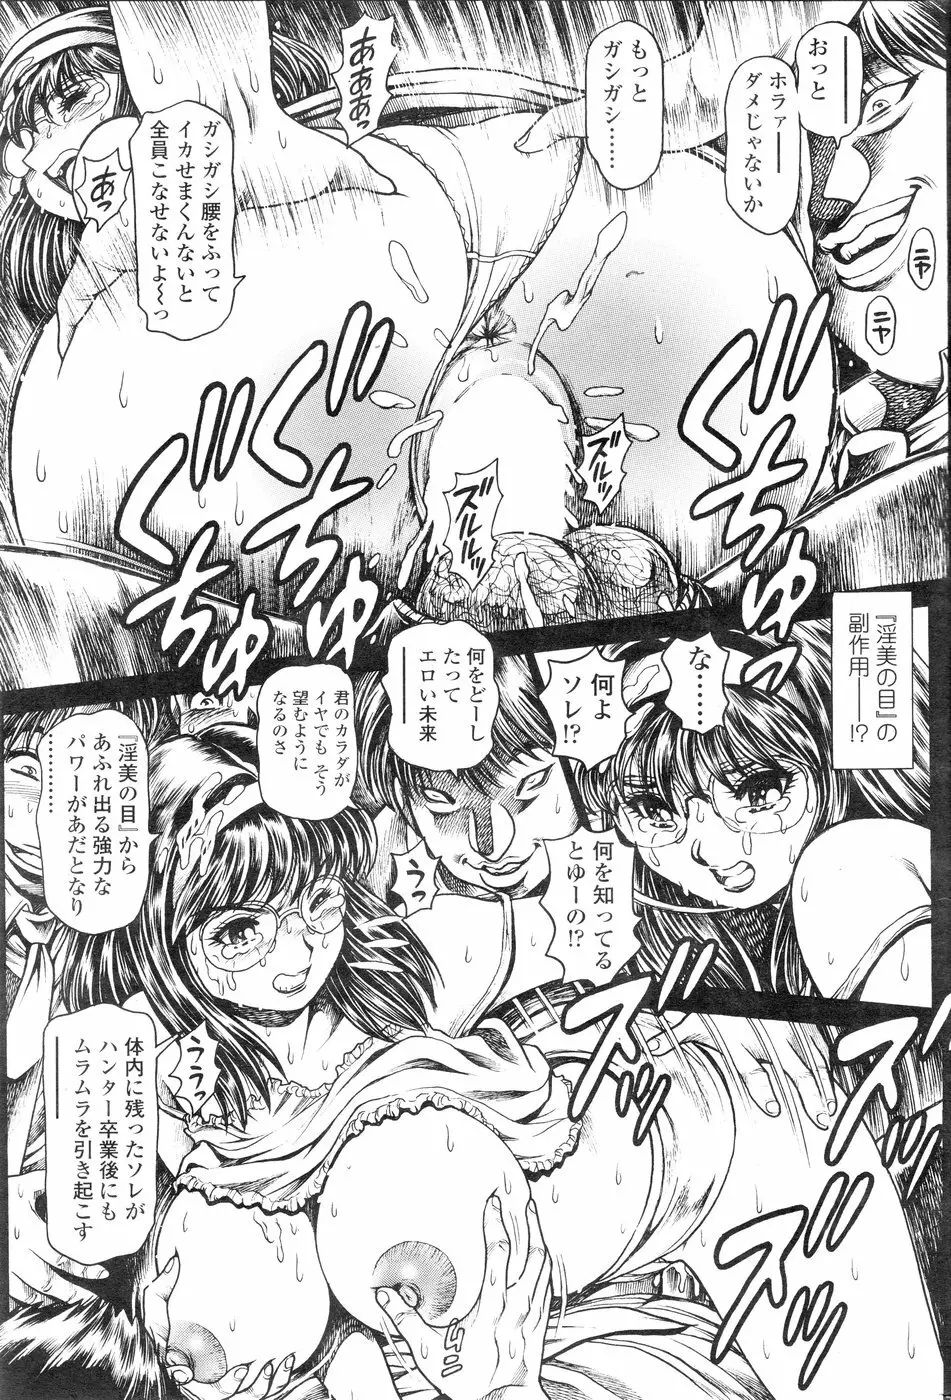 [Chataro] Nami SOS! 5 Girls – Before – Keiko 004-006 [JAP].cbr 25ページ